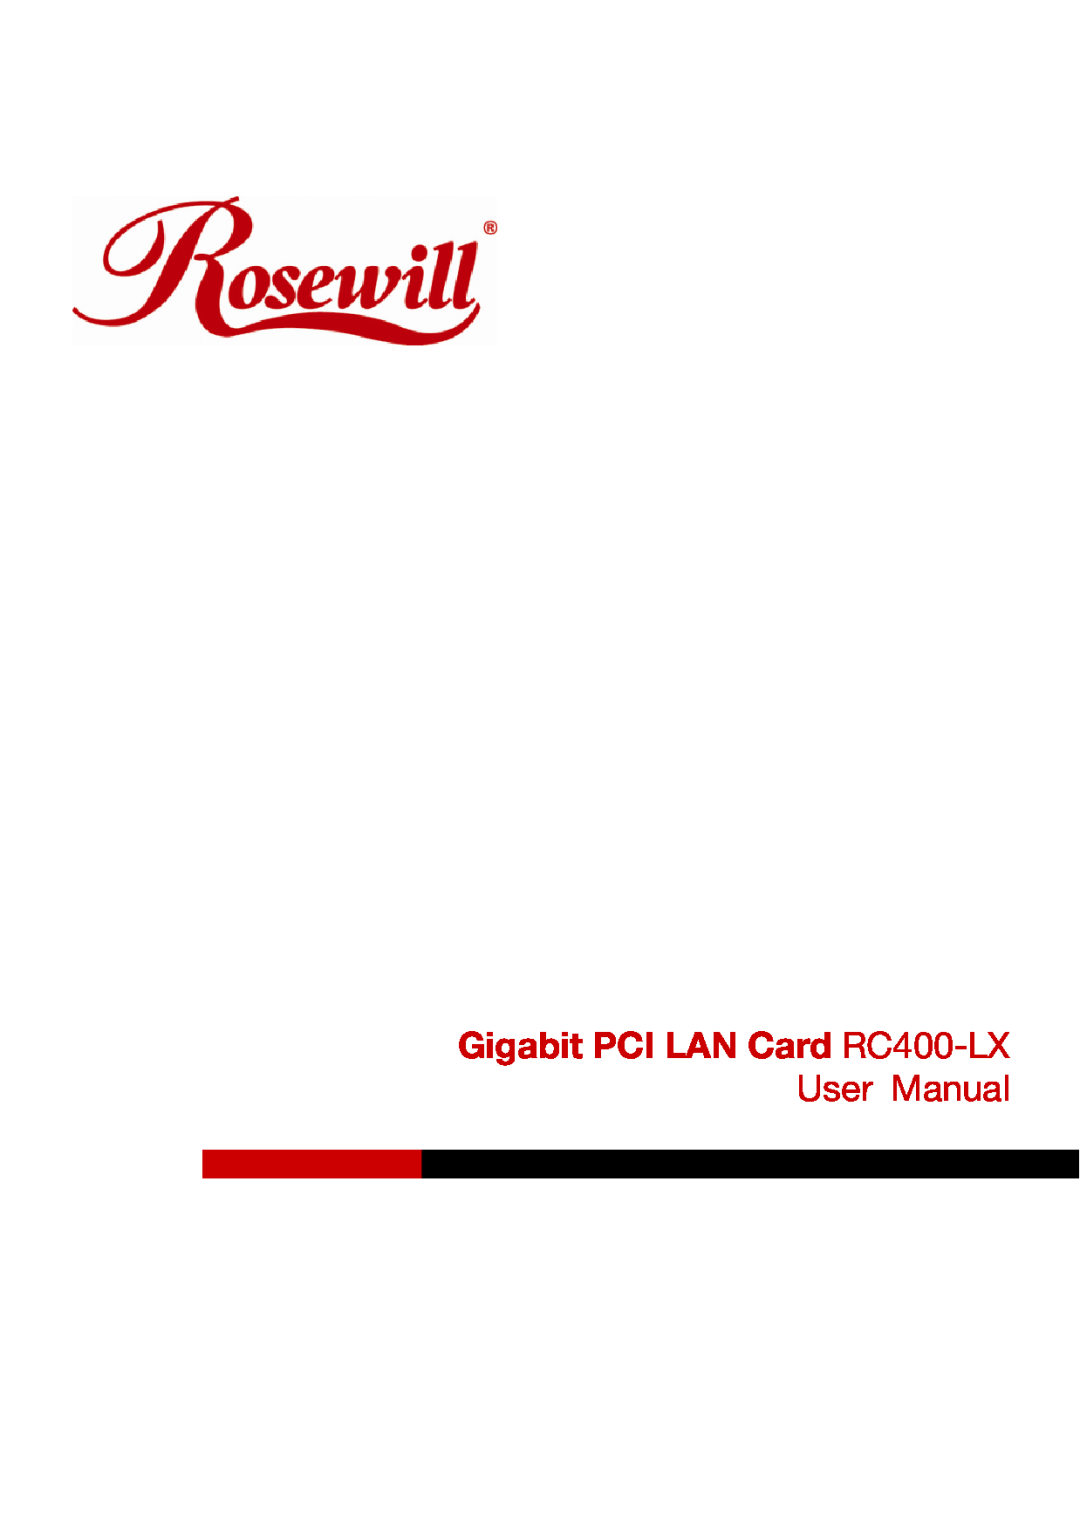 Rosewill RC-400 user manual Gigabit PCI LAN Card RC400-LX, User Manual 